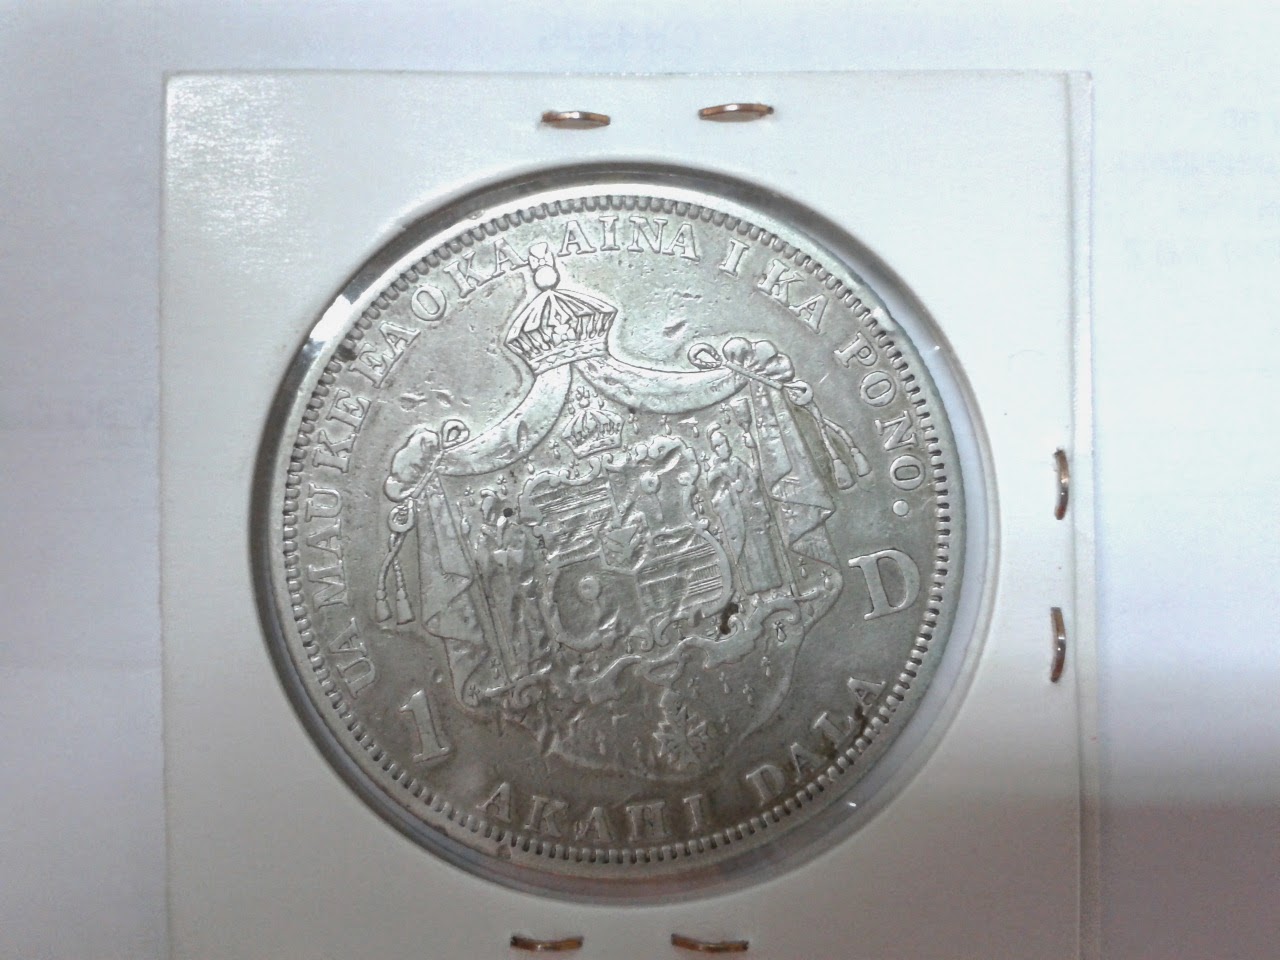 http://www.collecione.com/loja/moeda-hawaii-dolar-1883-akahi-dala-p-10534.html